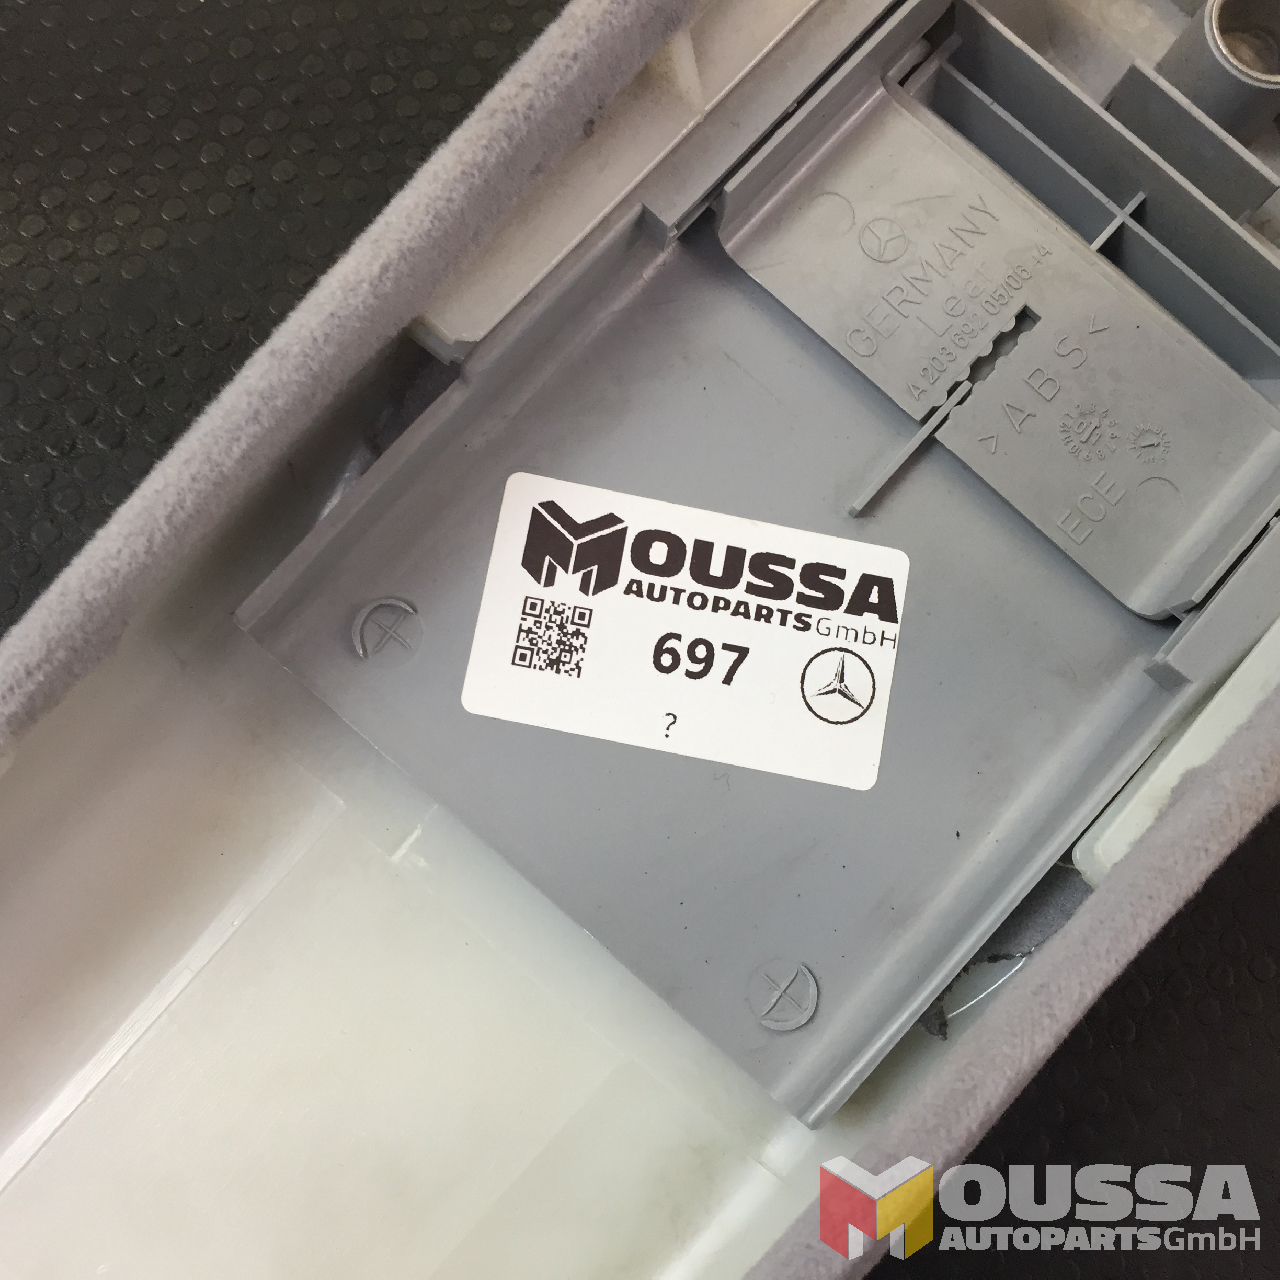 MOUSSA-AUTOPARTS-64b05fa6cdf5f.jpg